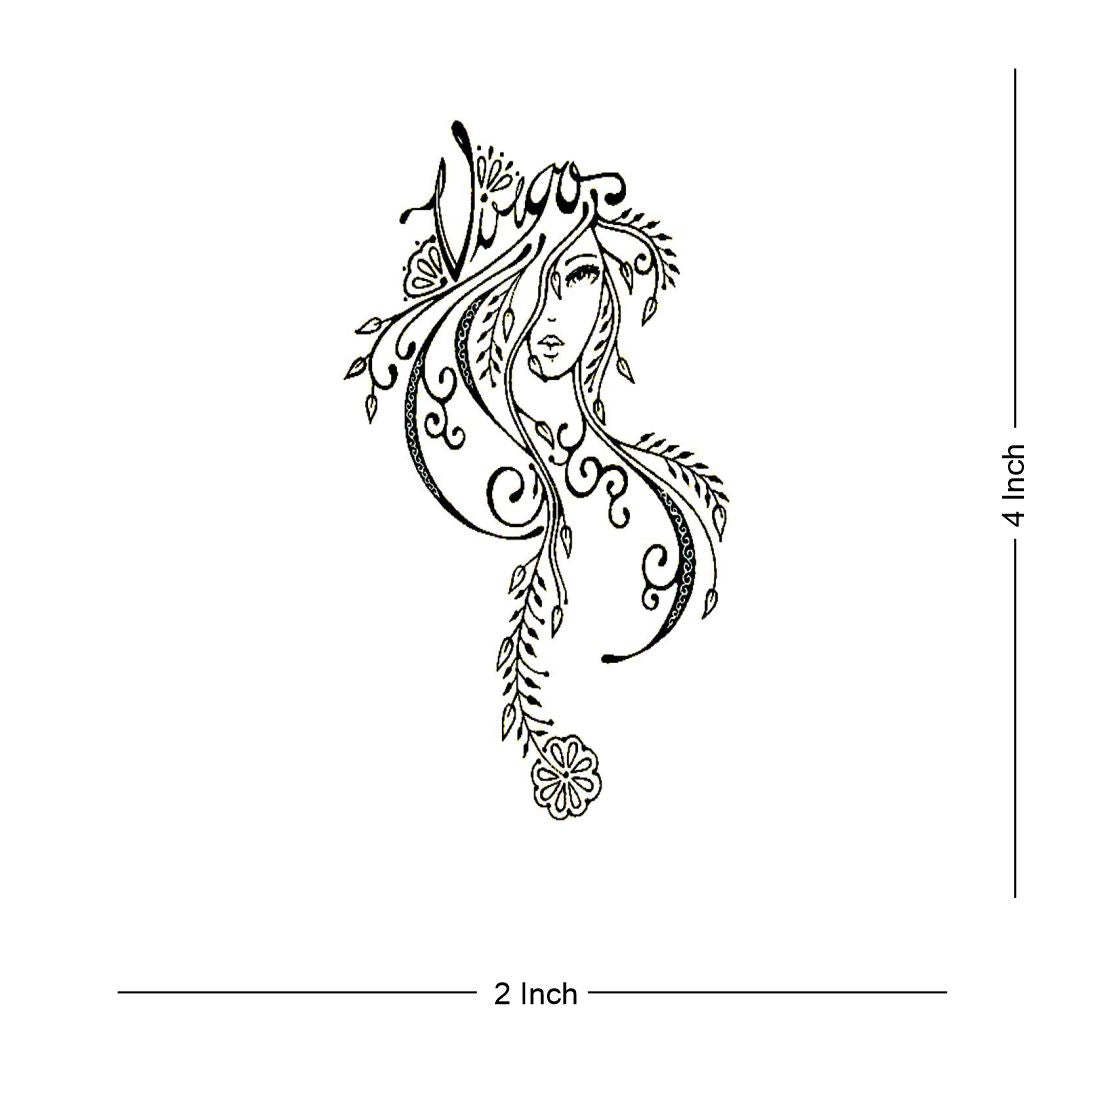 Virgo Horoscope Flower Tattoo Tattoo Design and Tattoo Stencil/template  Instant Digital Download Tattoo Permit - Etsy